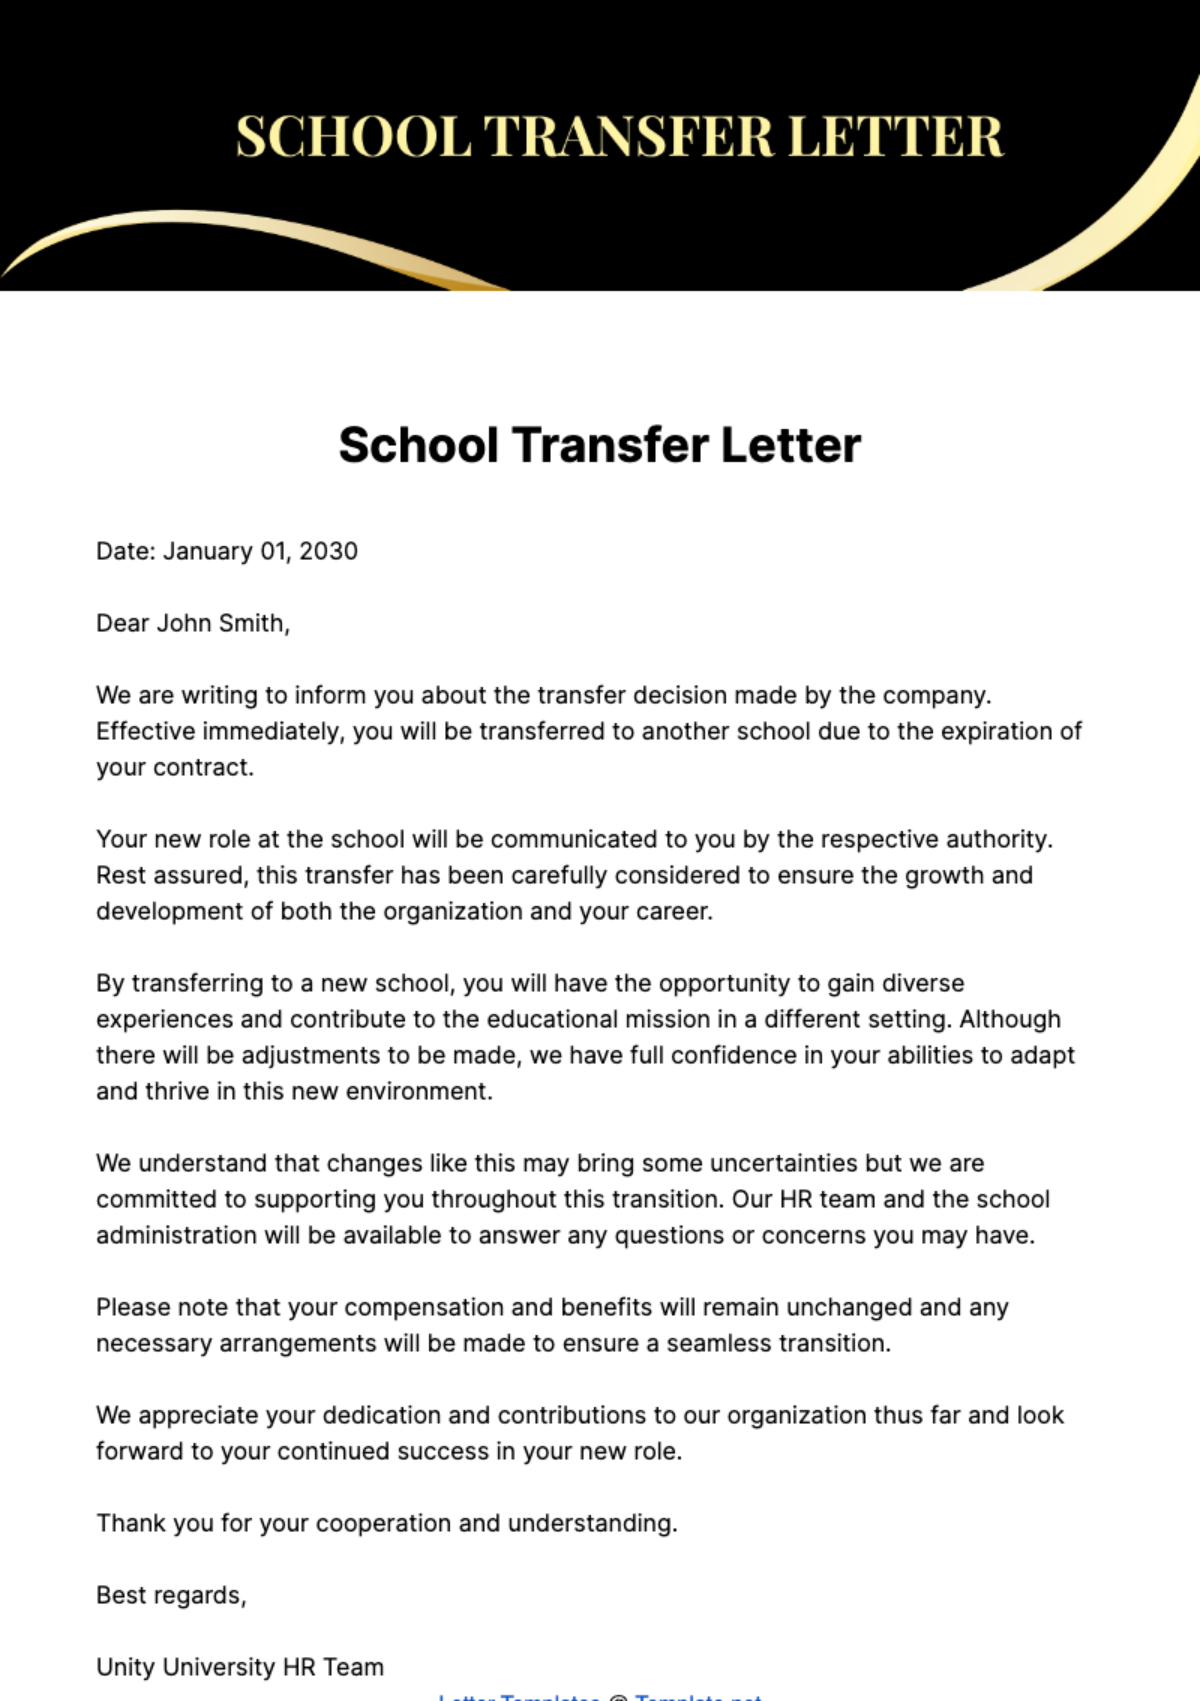 School Transfer Letter Template